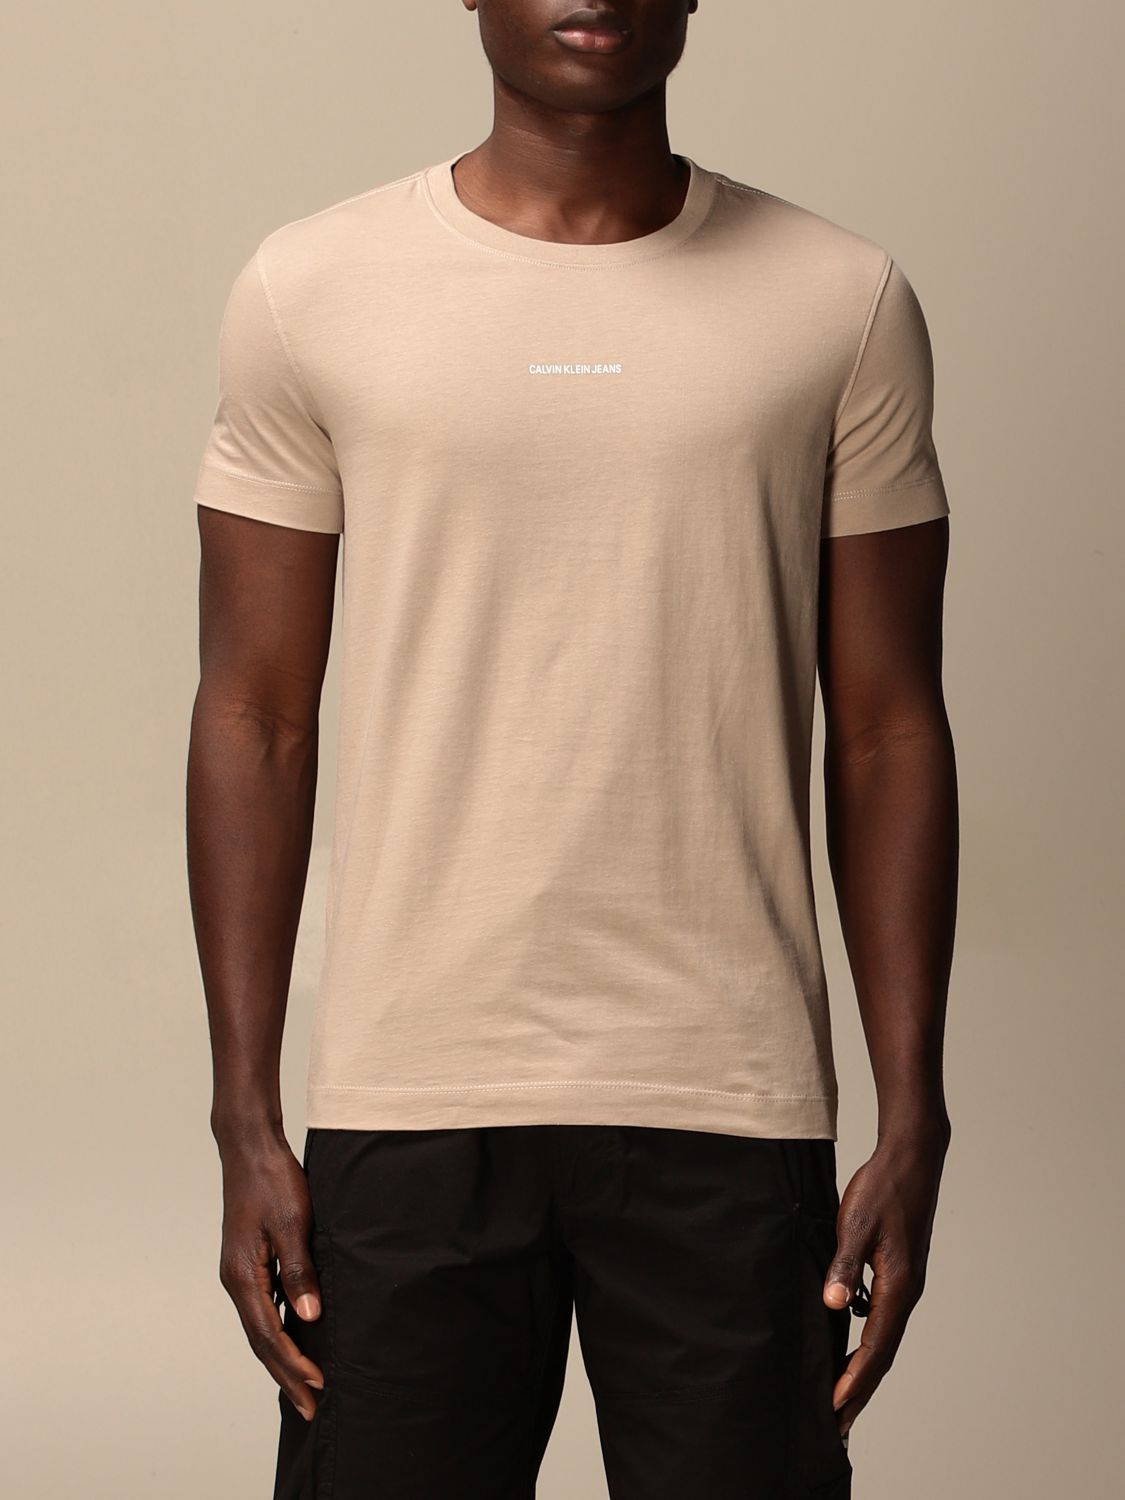 CALVIN KLEIN JEANS: t-shirt for men - Beige | Calvin Klein Jeans t-shirt  J30J318067 online on 